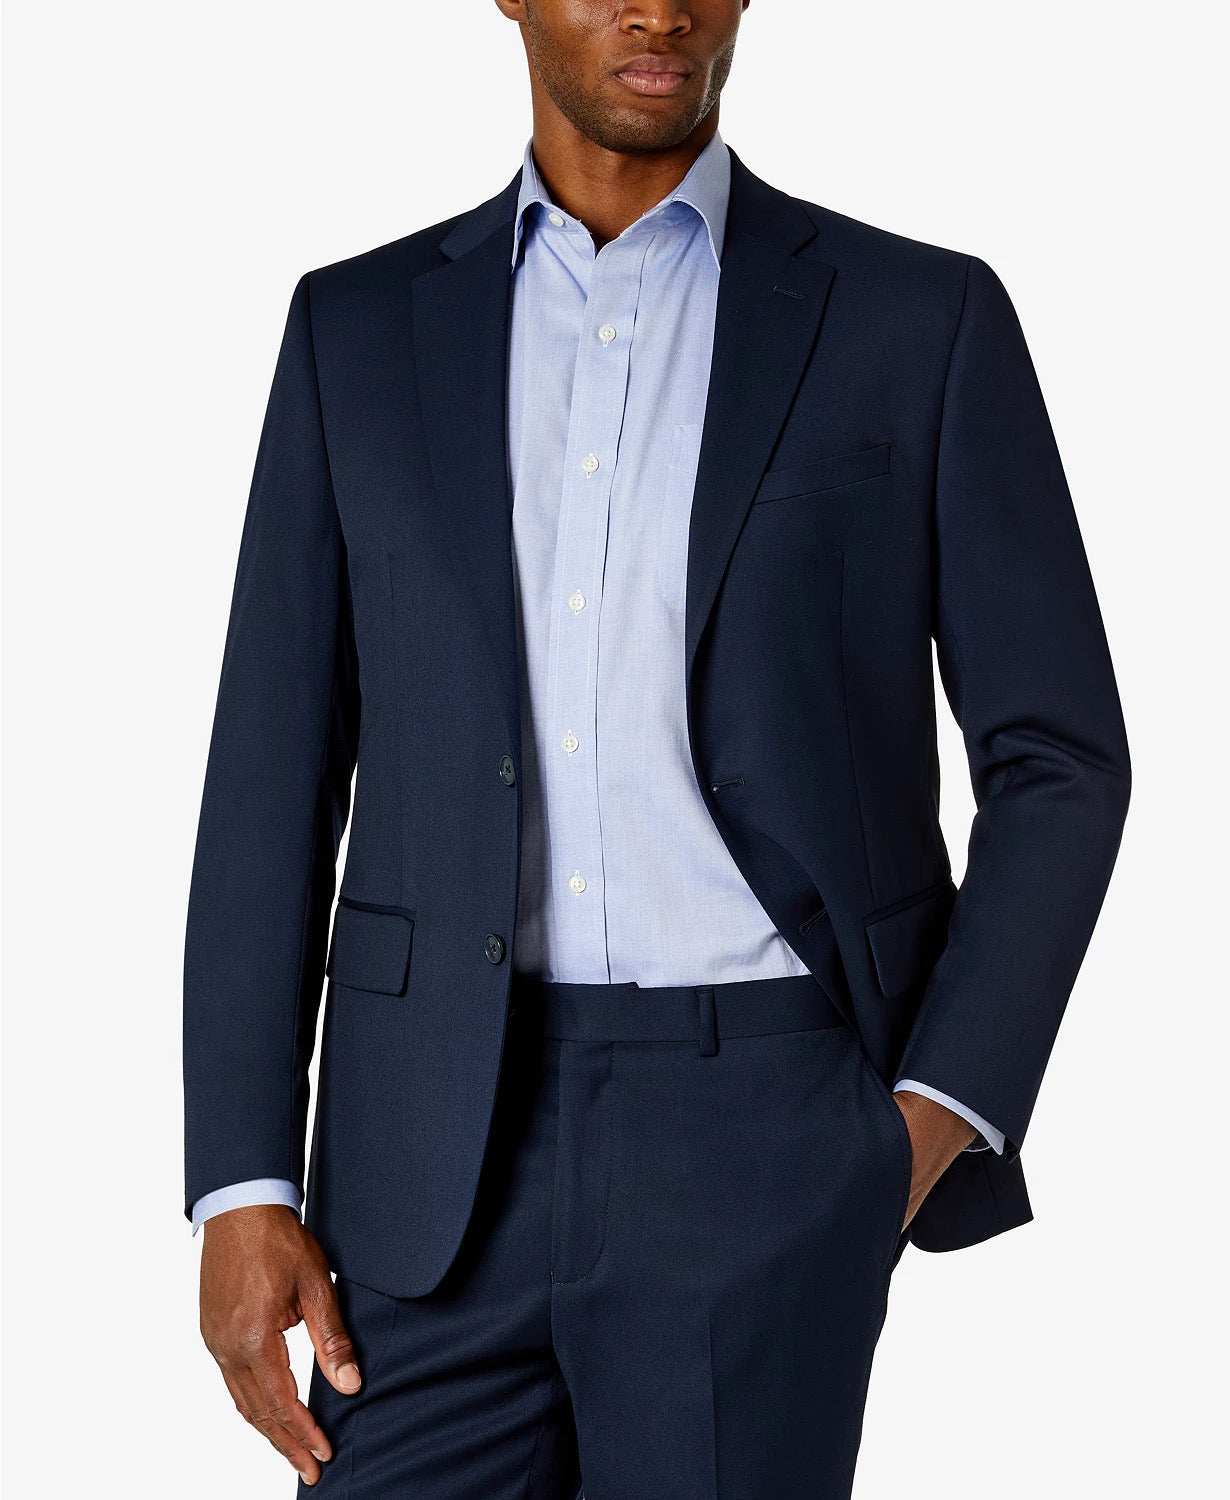 Van Heusen Men's Suit Navy Blue 42L / 35 x 32 Flex Slim Fit